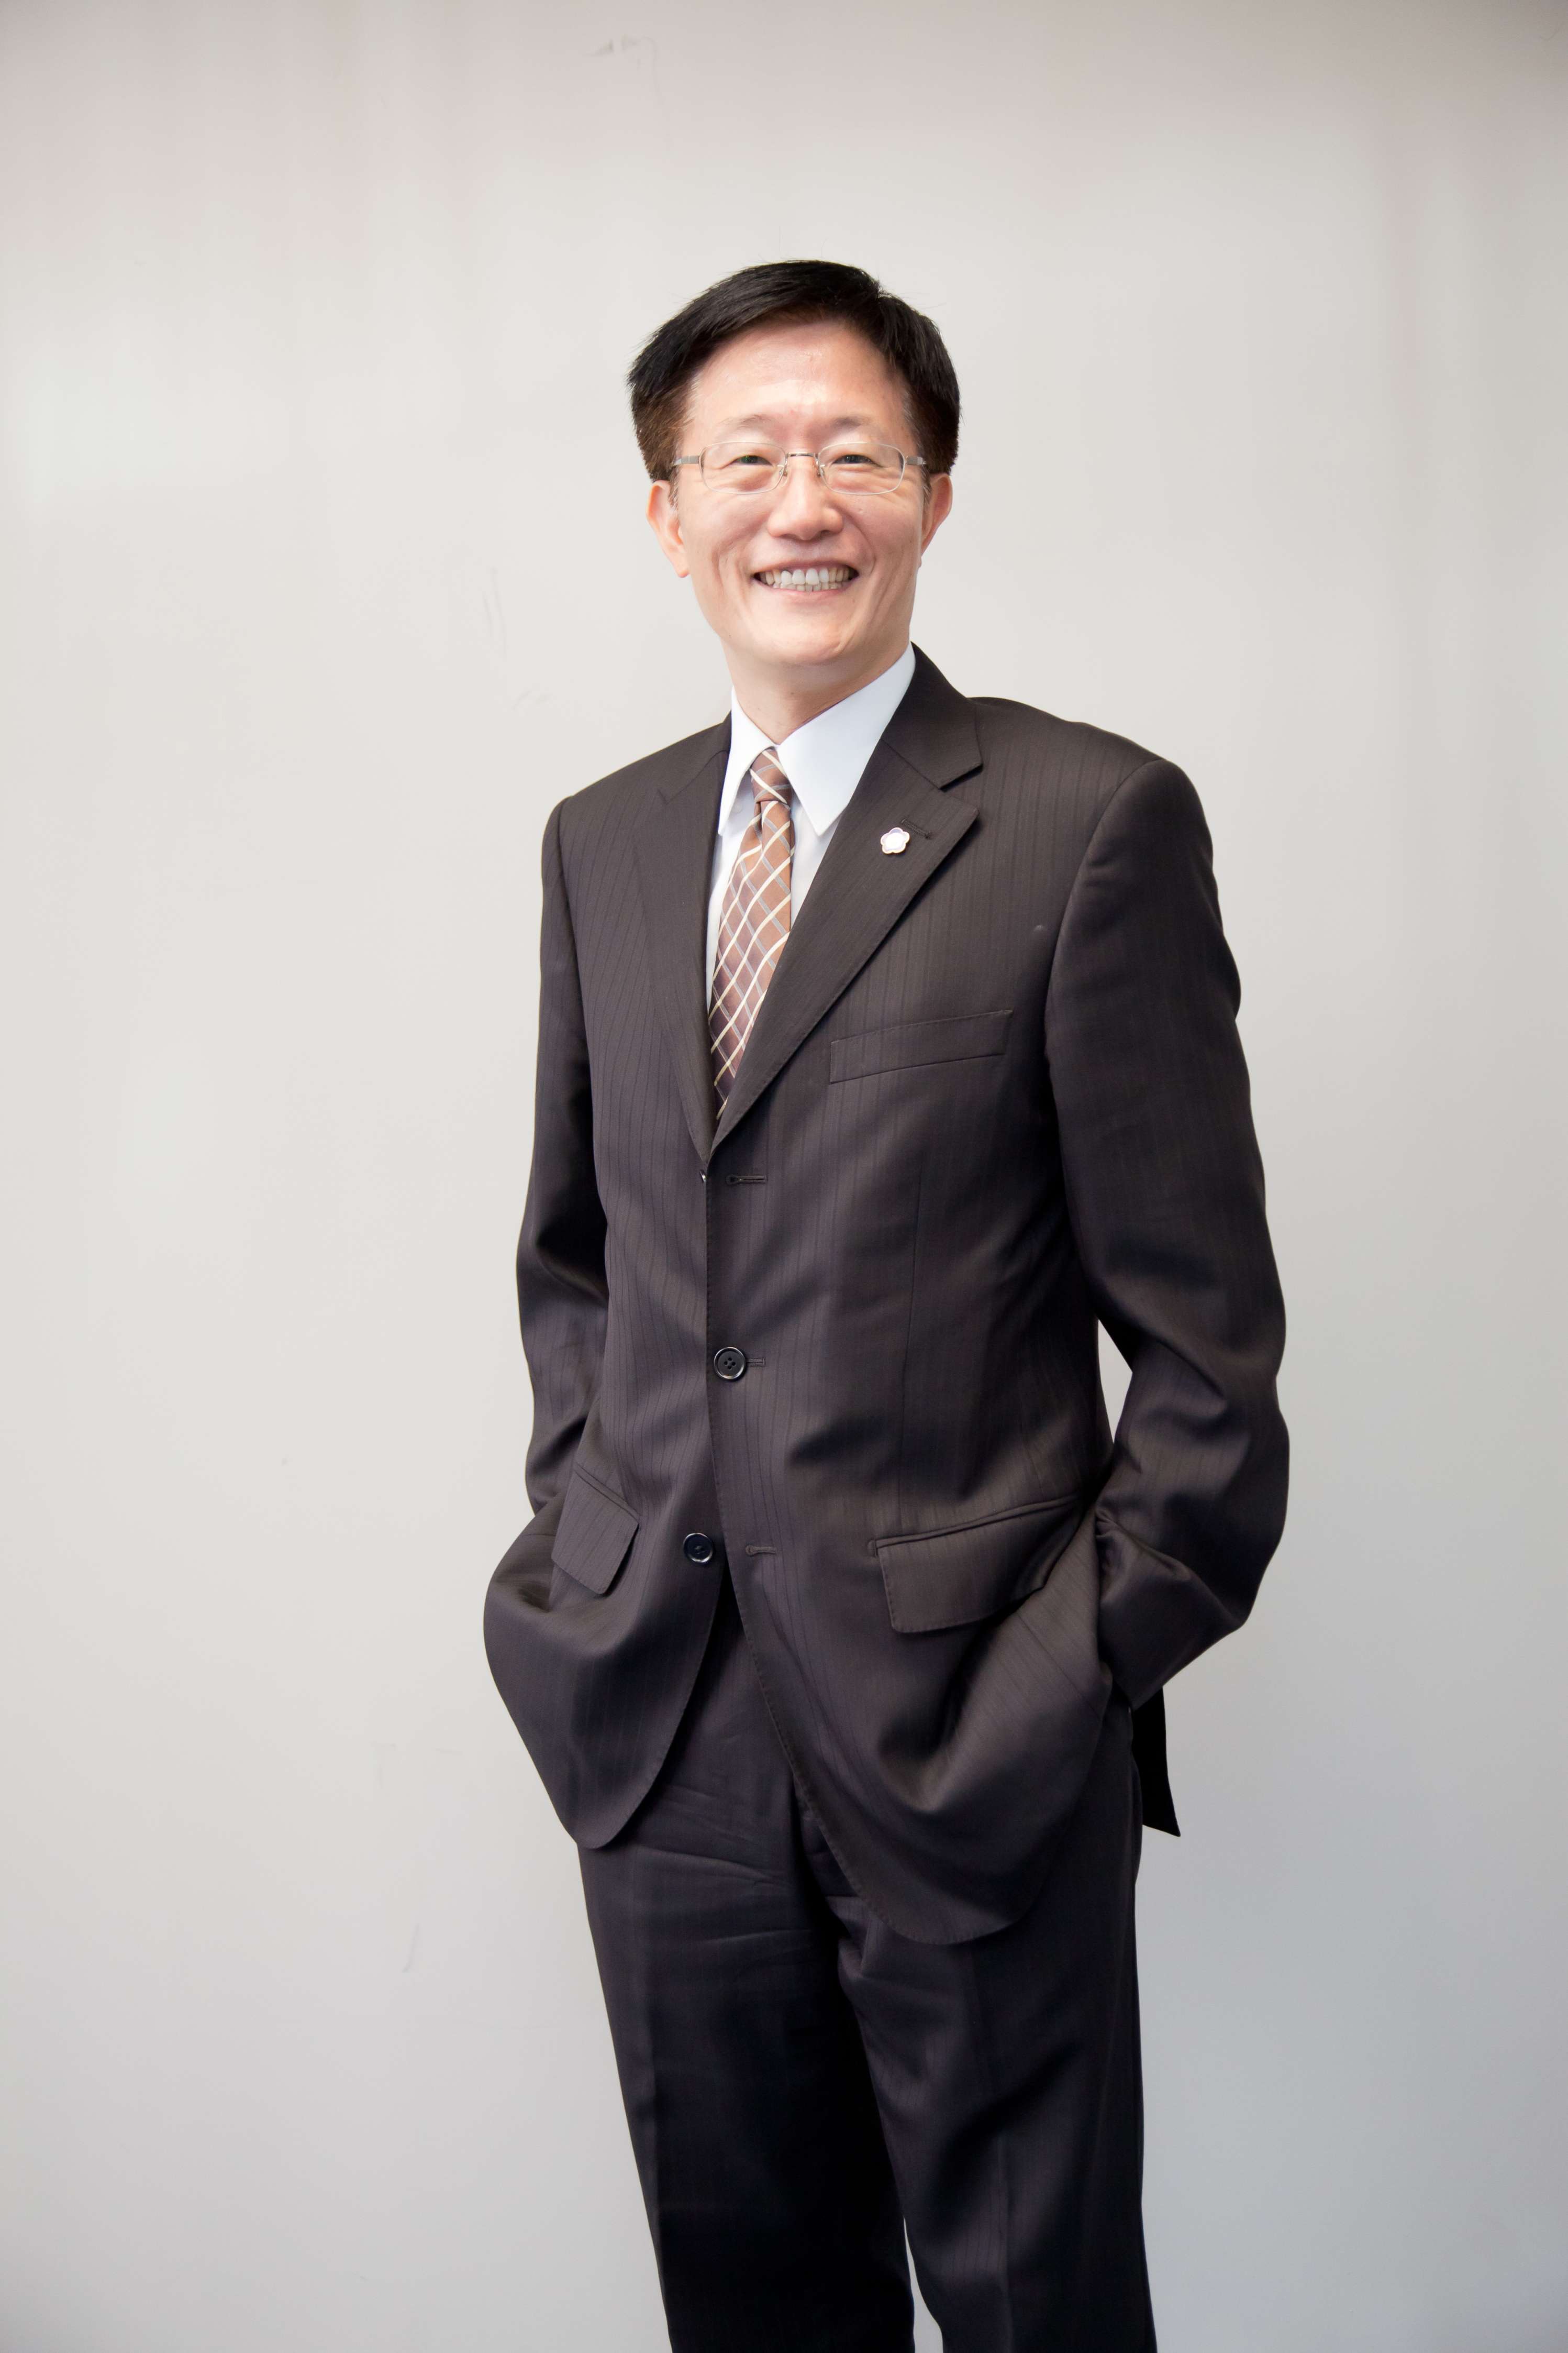 Dr Edward Chow, president